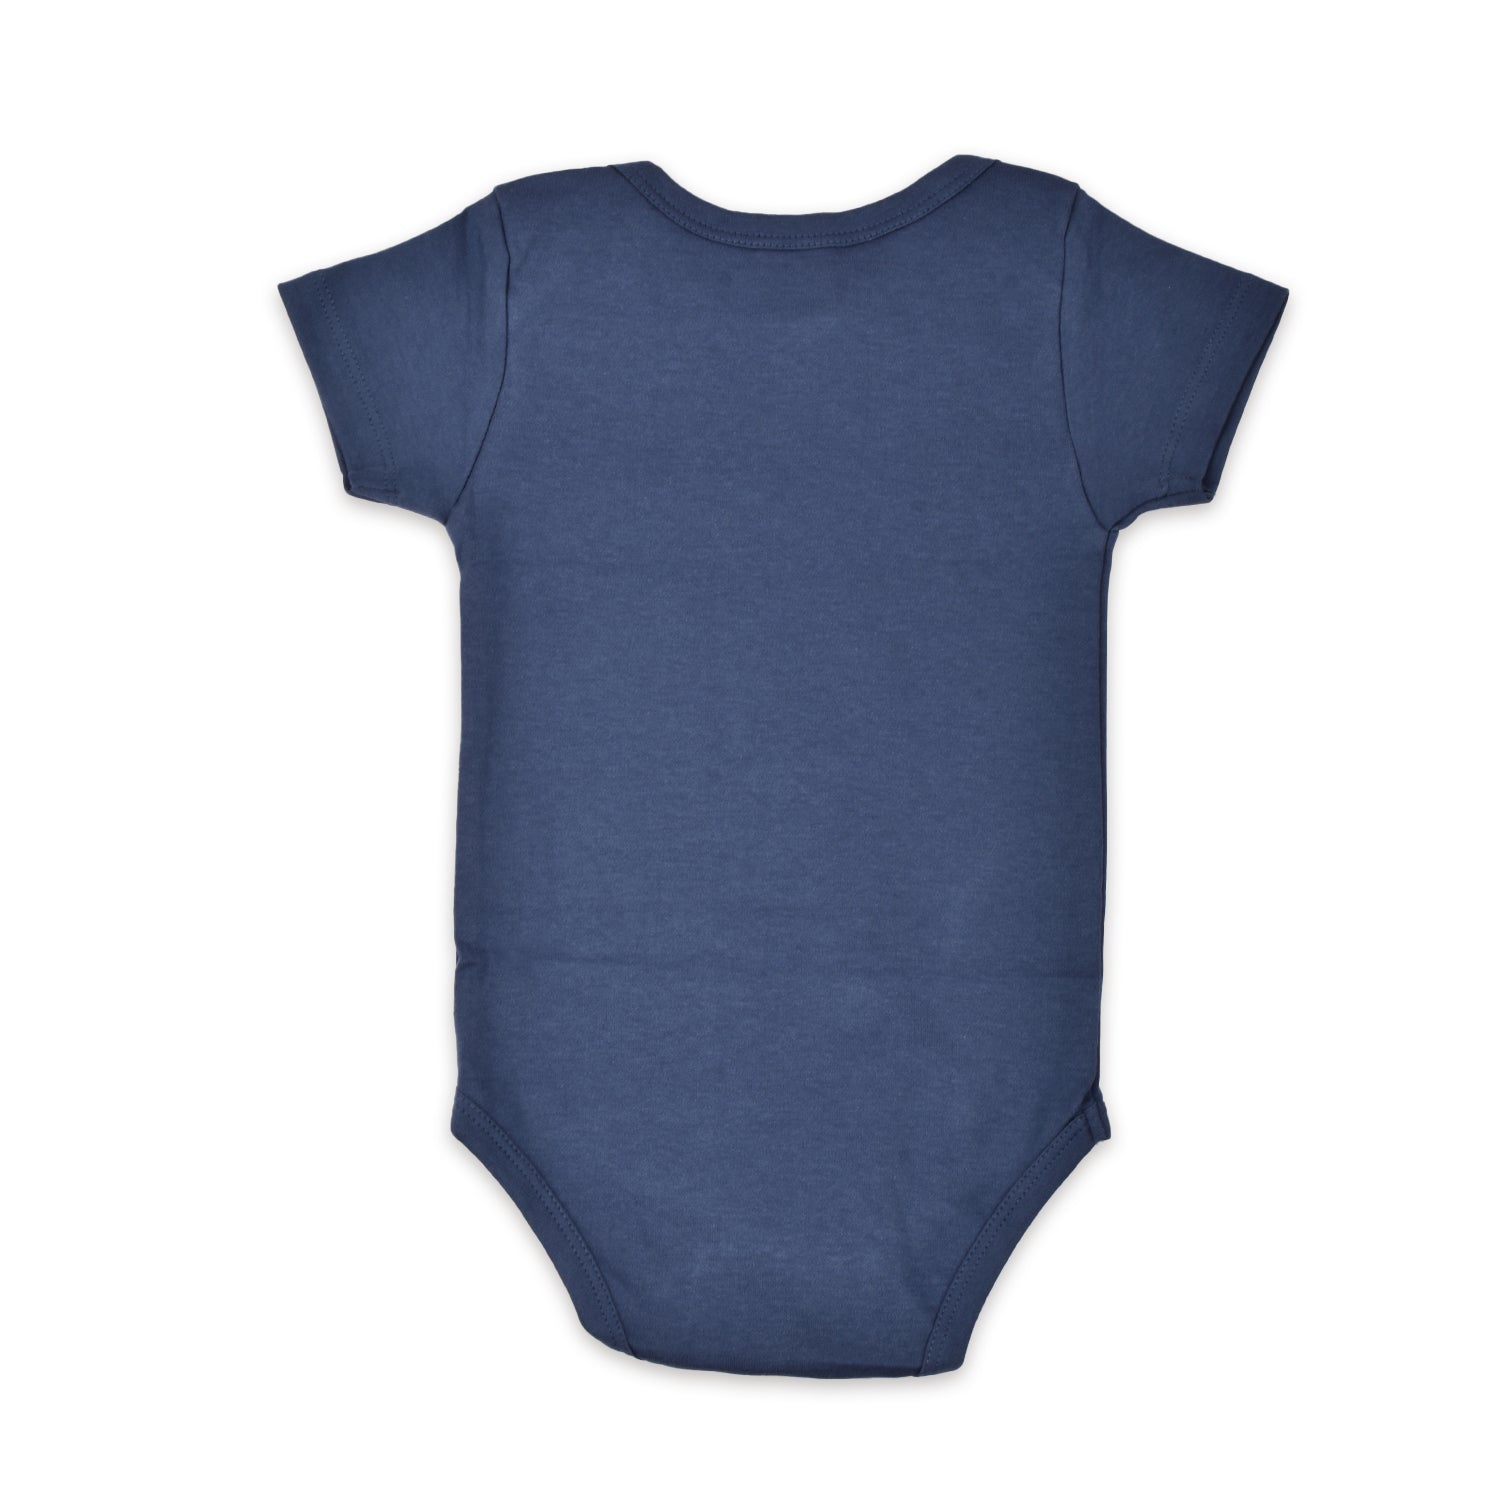 Baby Organic Cotton  Onesie Navy & Blue Striped -Pack of 2